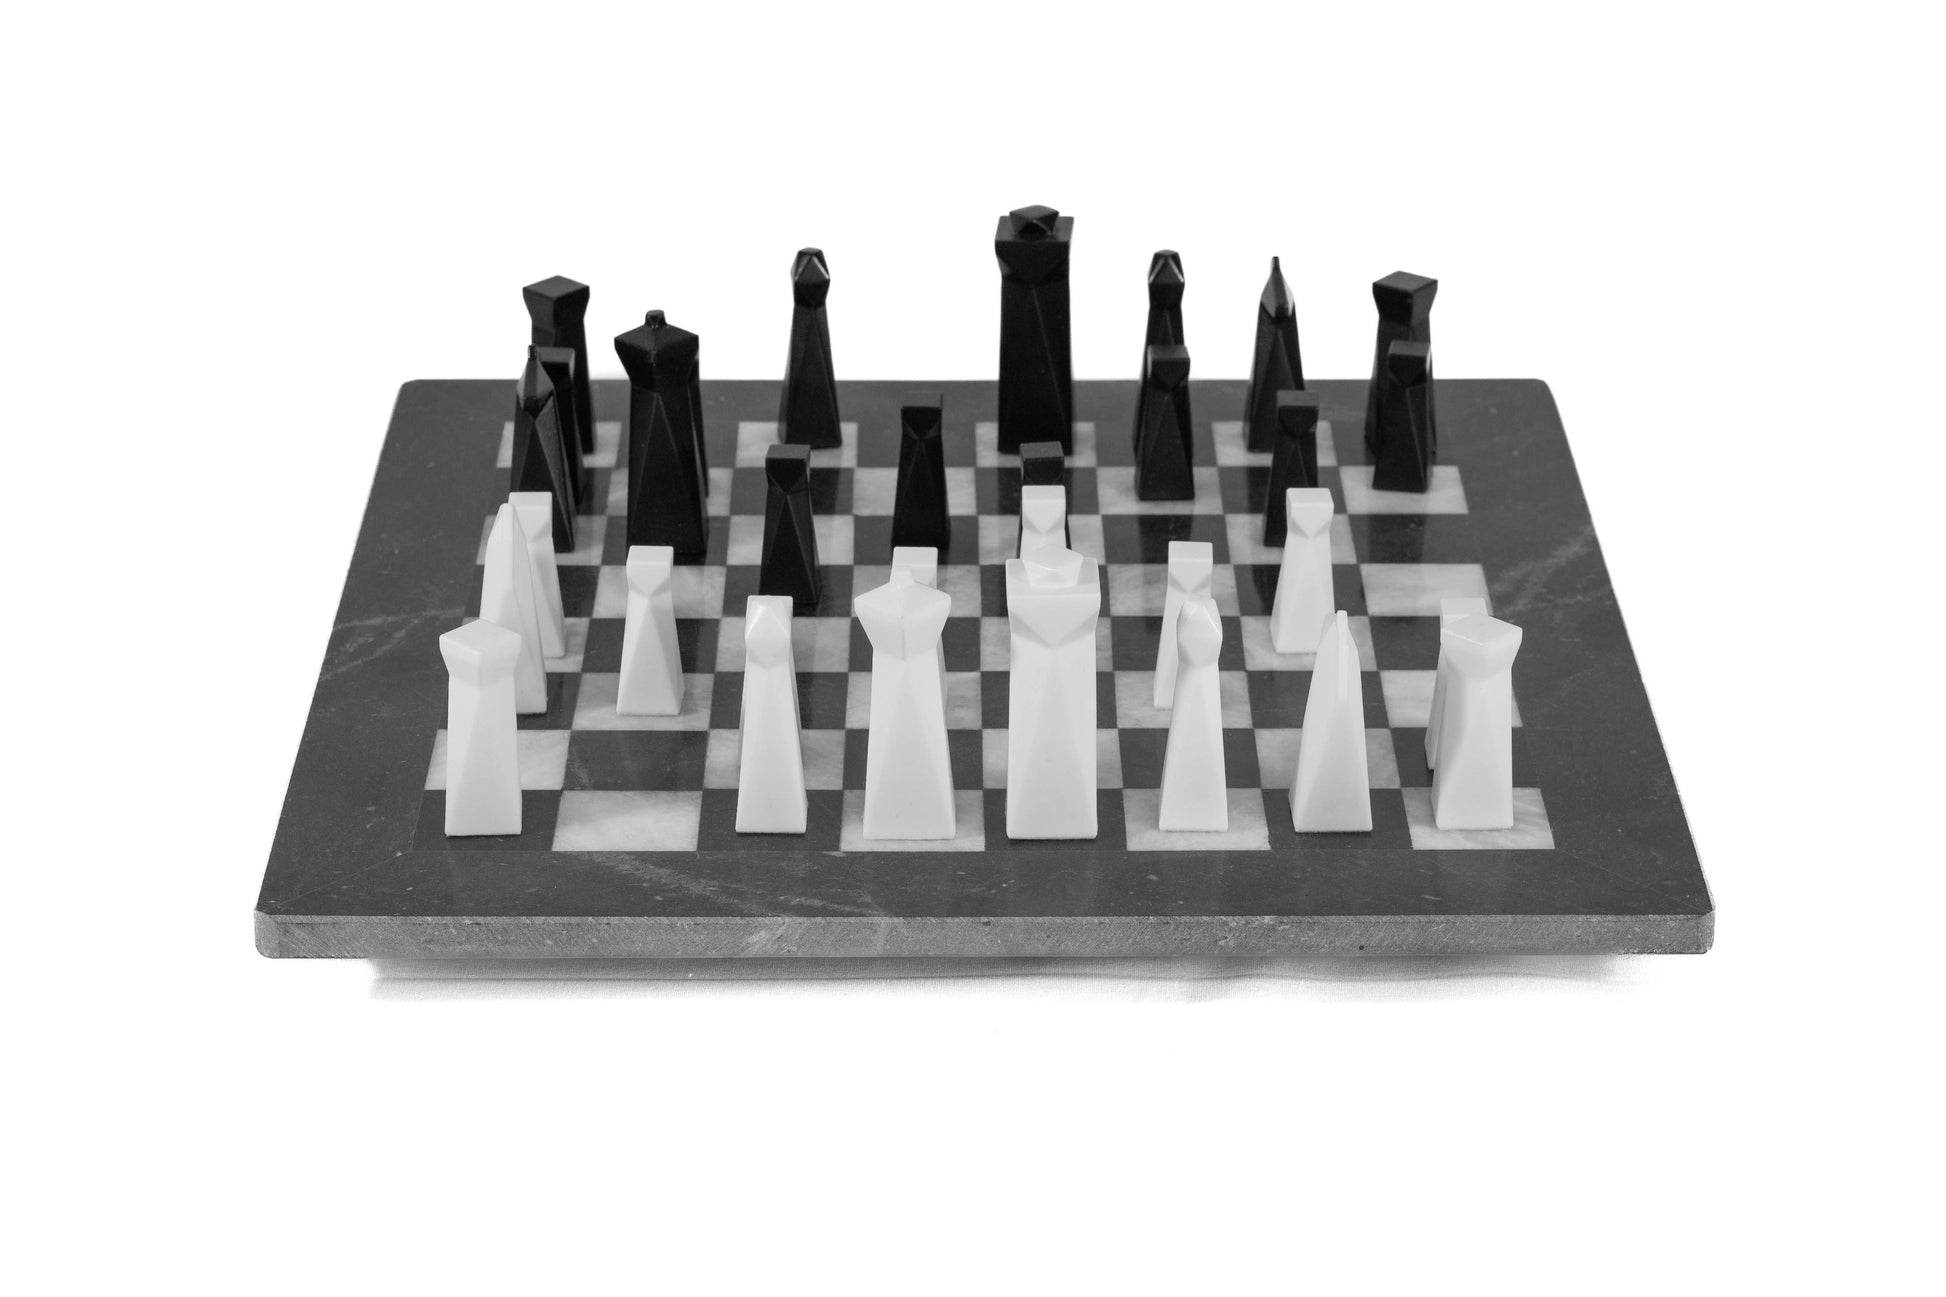 Handmade Wooden Chess Set Luxury Stone and Resin Chess 